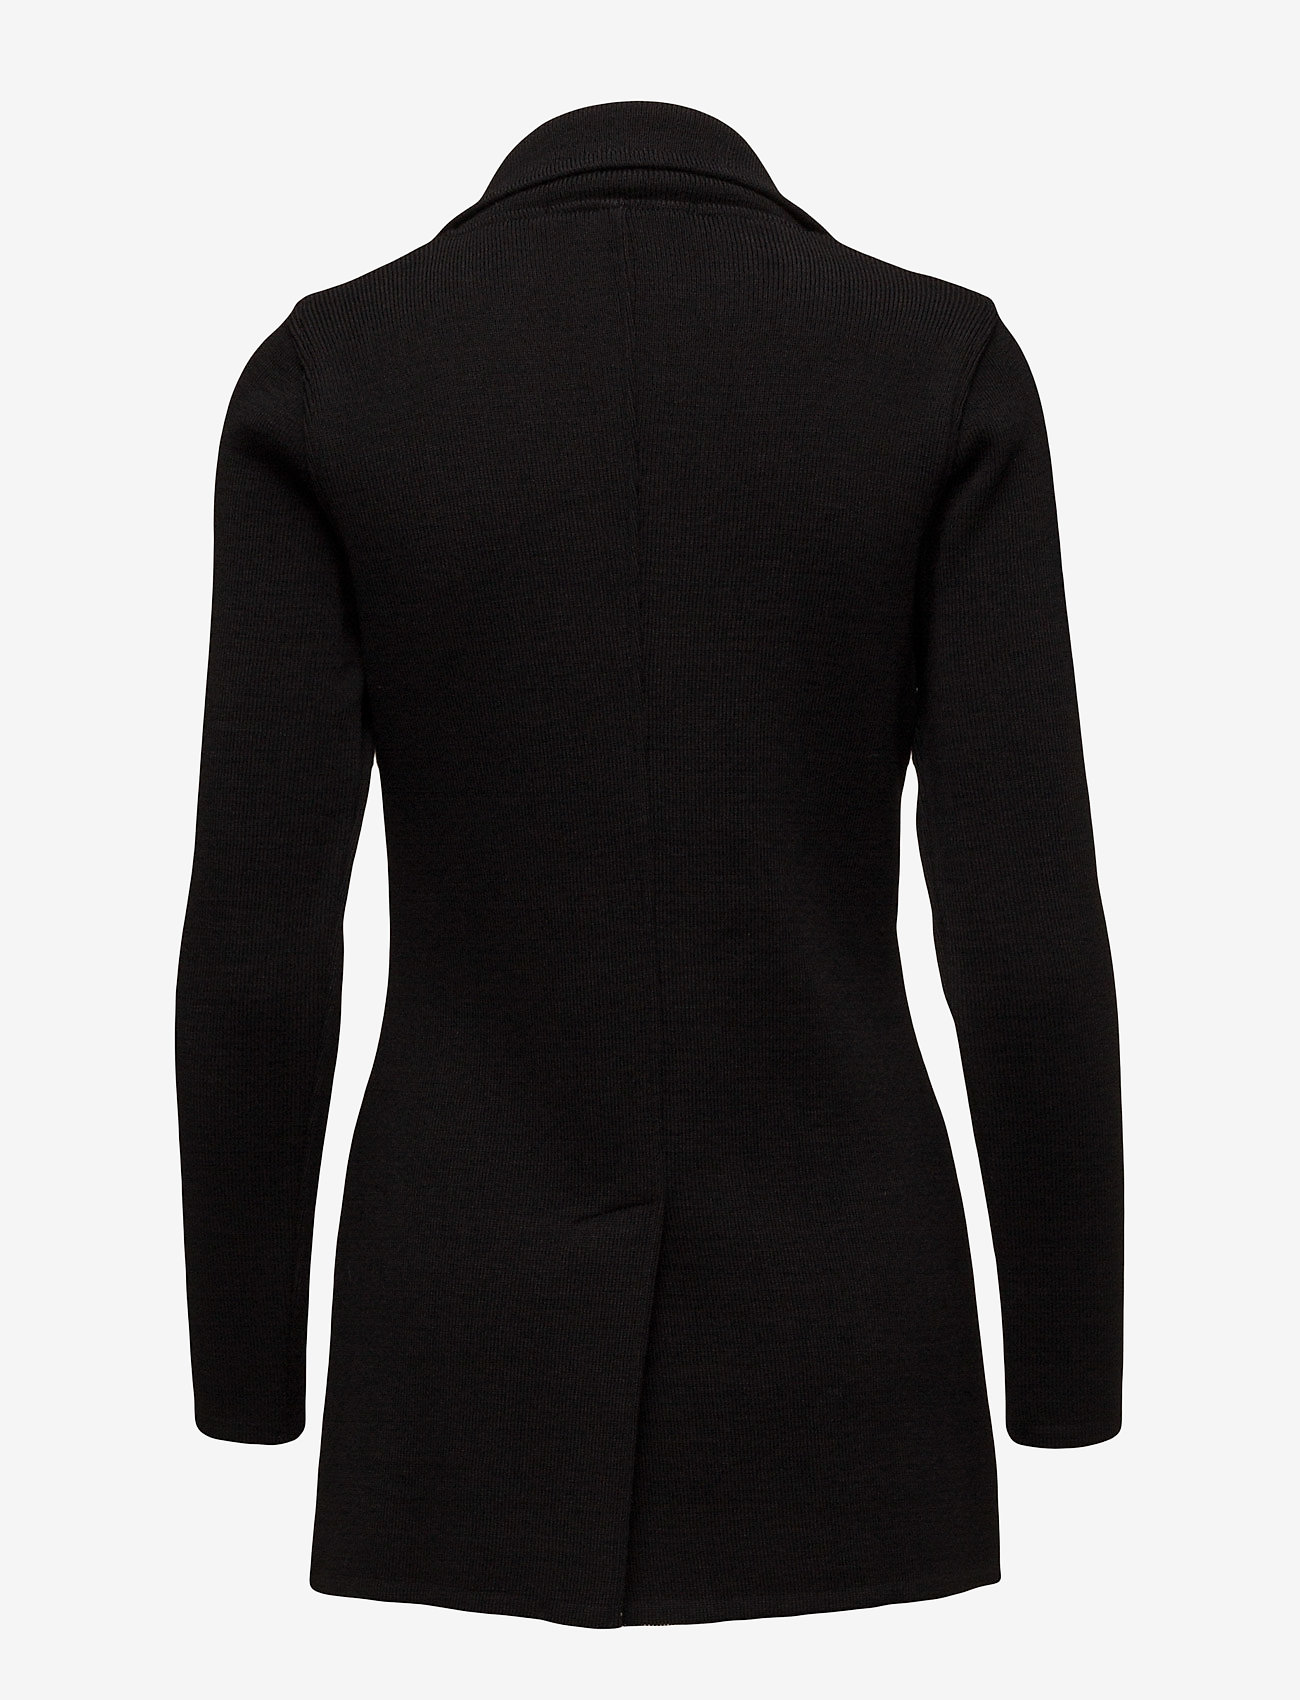 BUSNEL - Victoria jacket - Žaketes ar dubultu krūšu daļu - black - 1